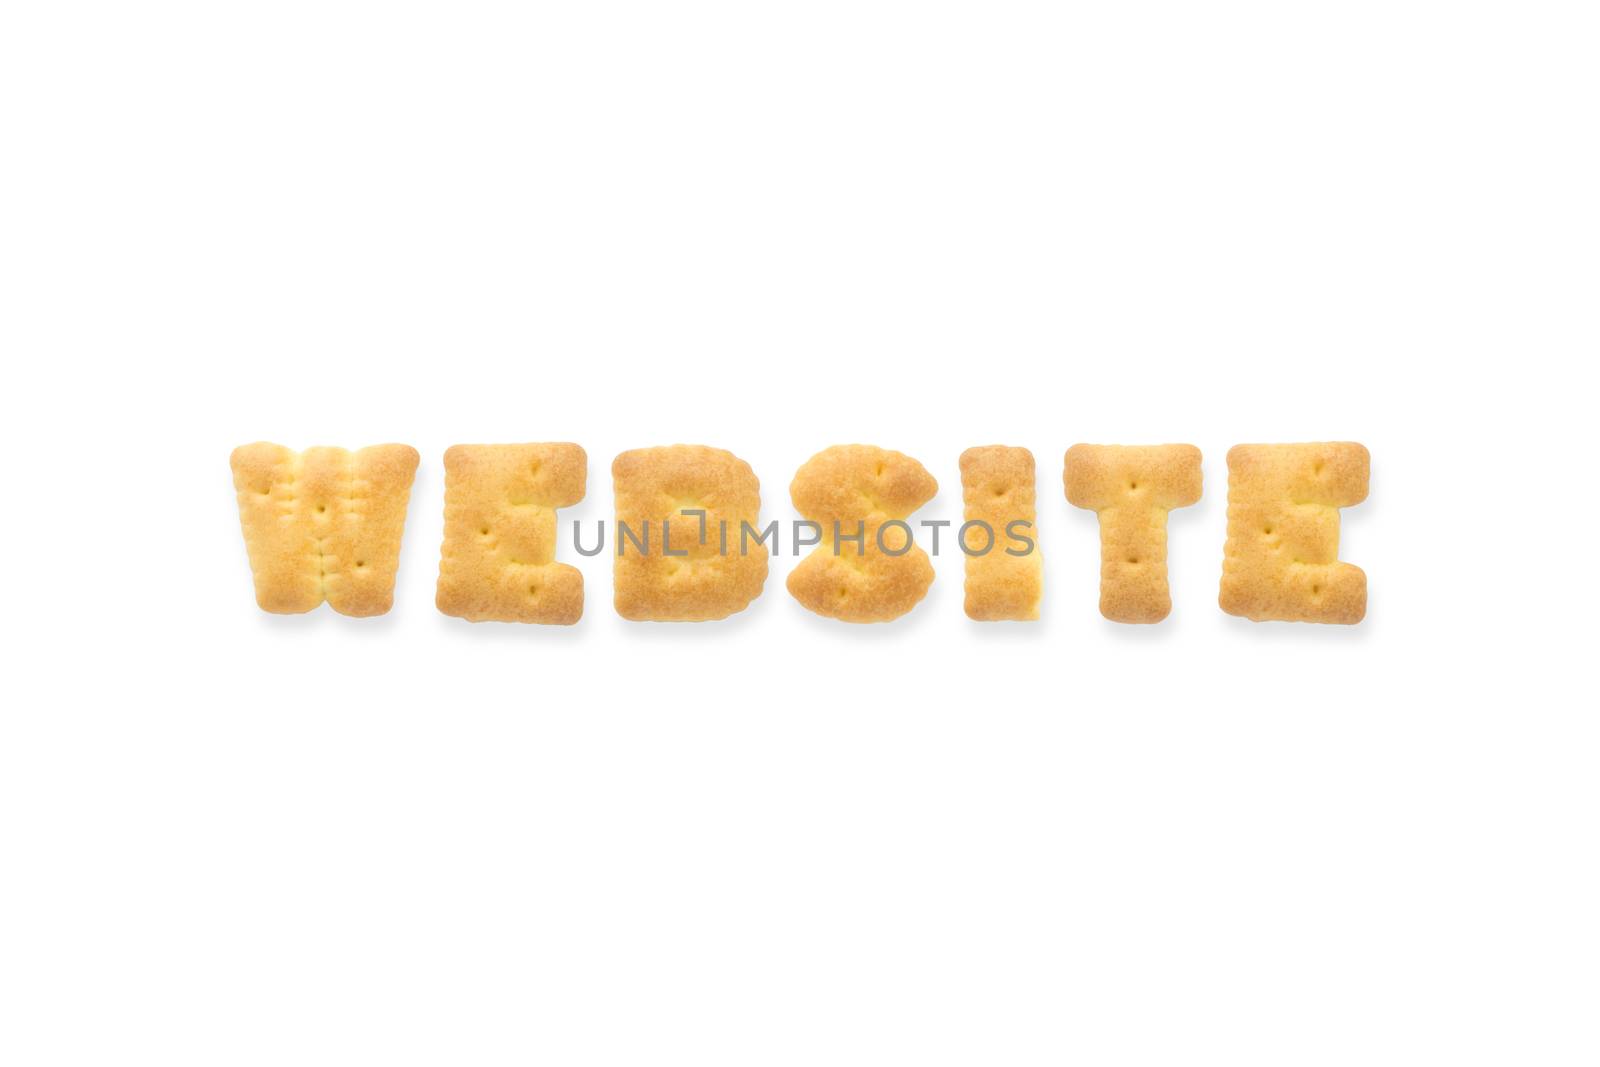 The Letter Word WEBSITE Alphabet Biscuit Cracker by vinnstock